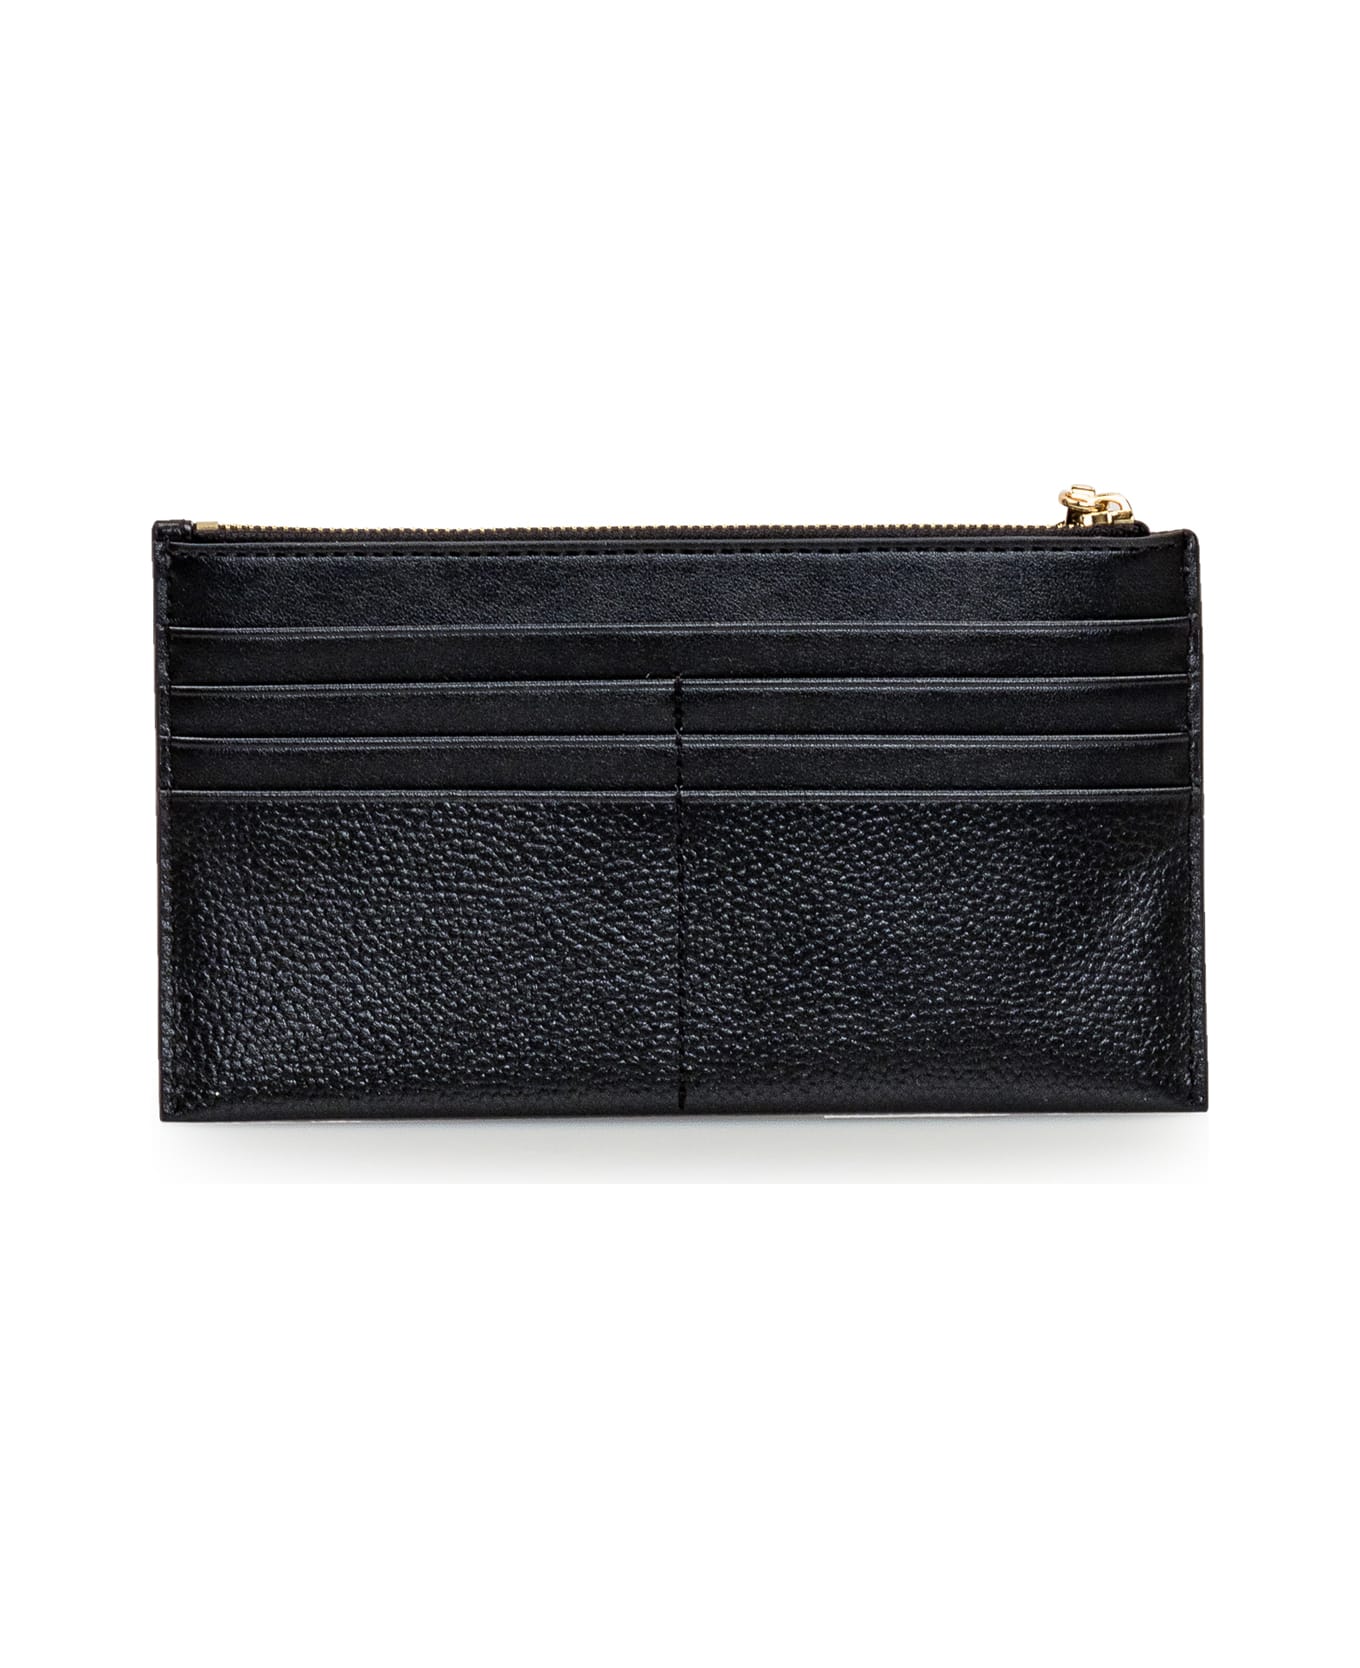 Michael Kors Collection Wallet - Black 財布